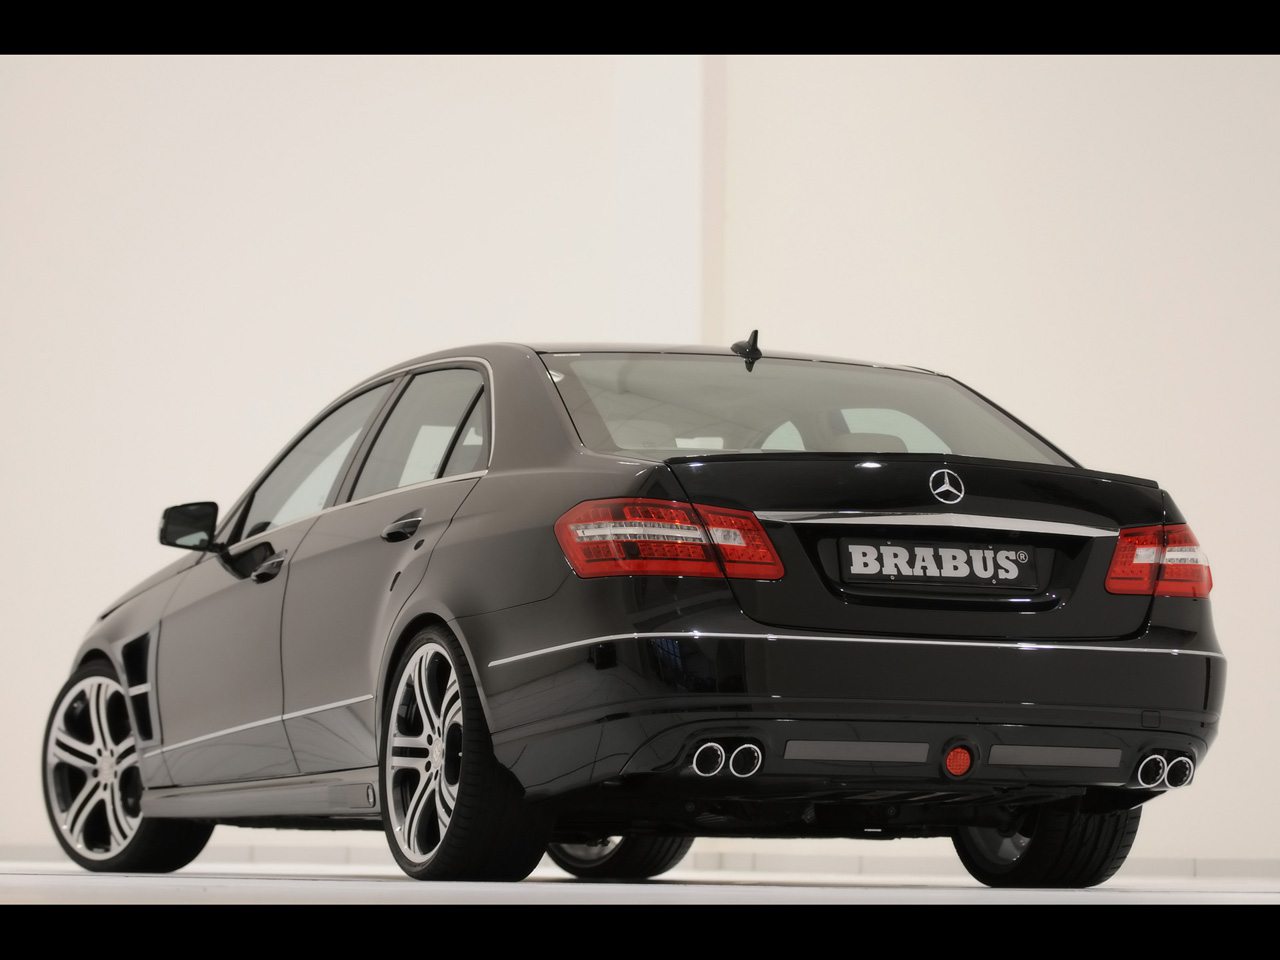 14478031852009-Brabus-Mercedes-Benz-E-Class-Rear-Angle-1280x960